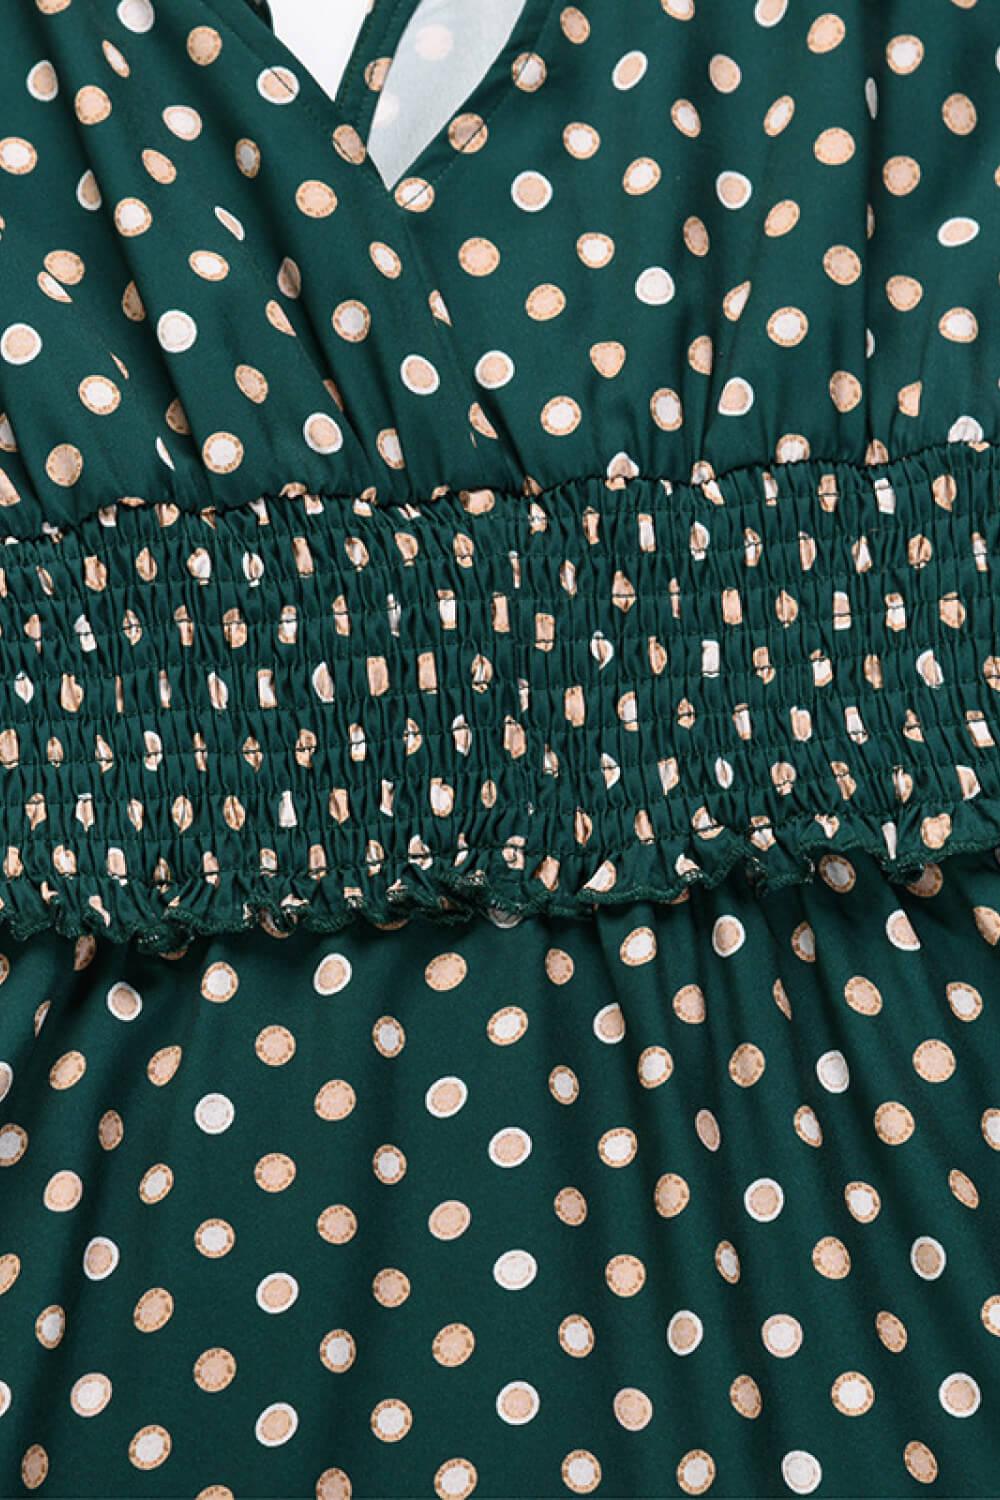 Polka Dot Tie-Shoulder Tiered Maxi Dress BLUE ZONE PLANET